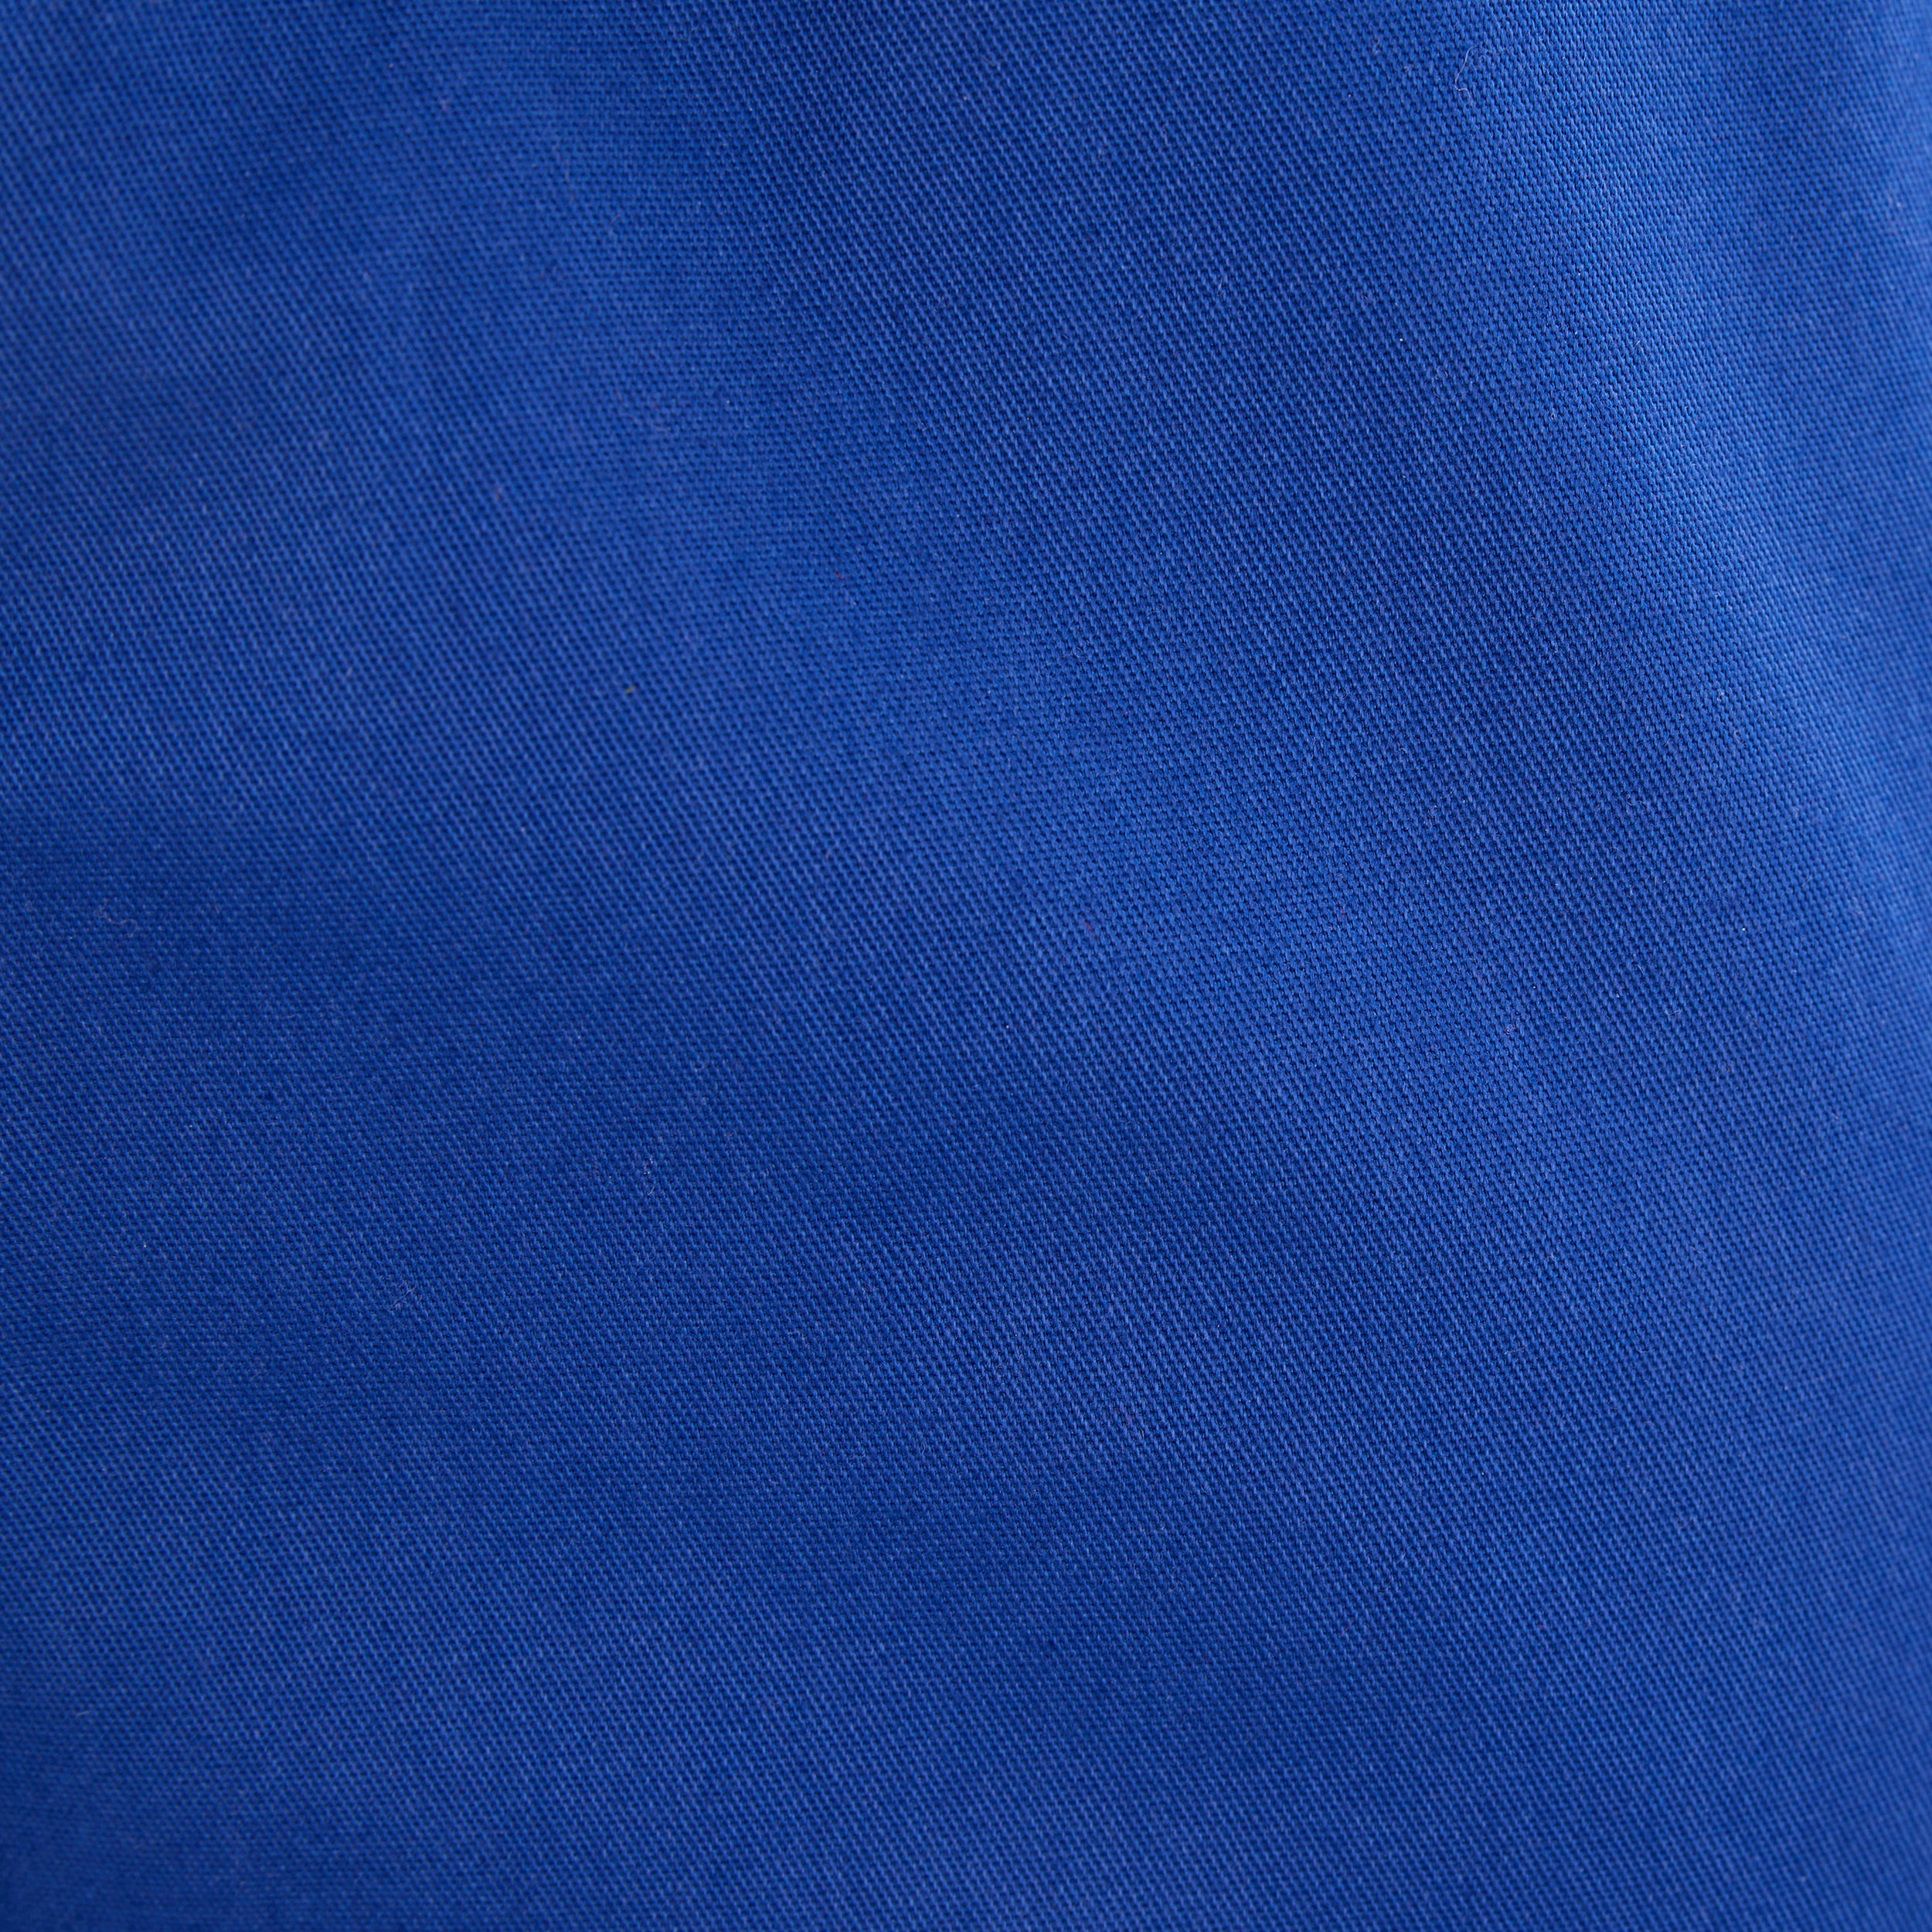 close up of blue polycotton fabric